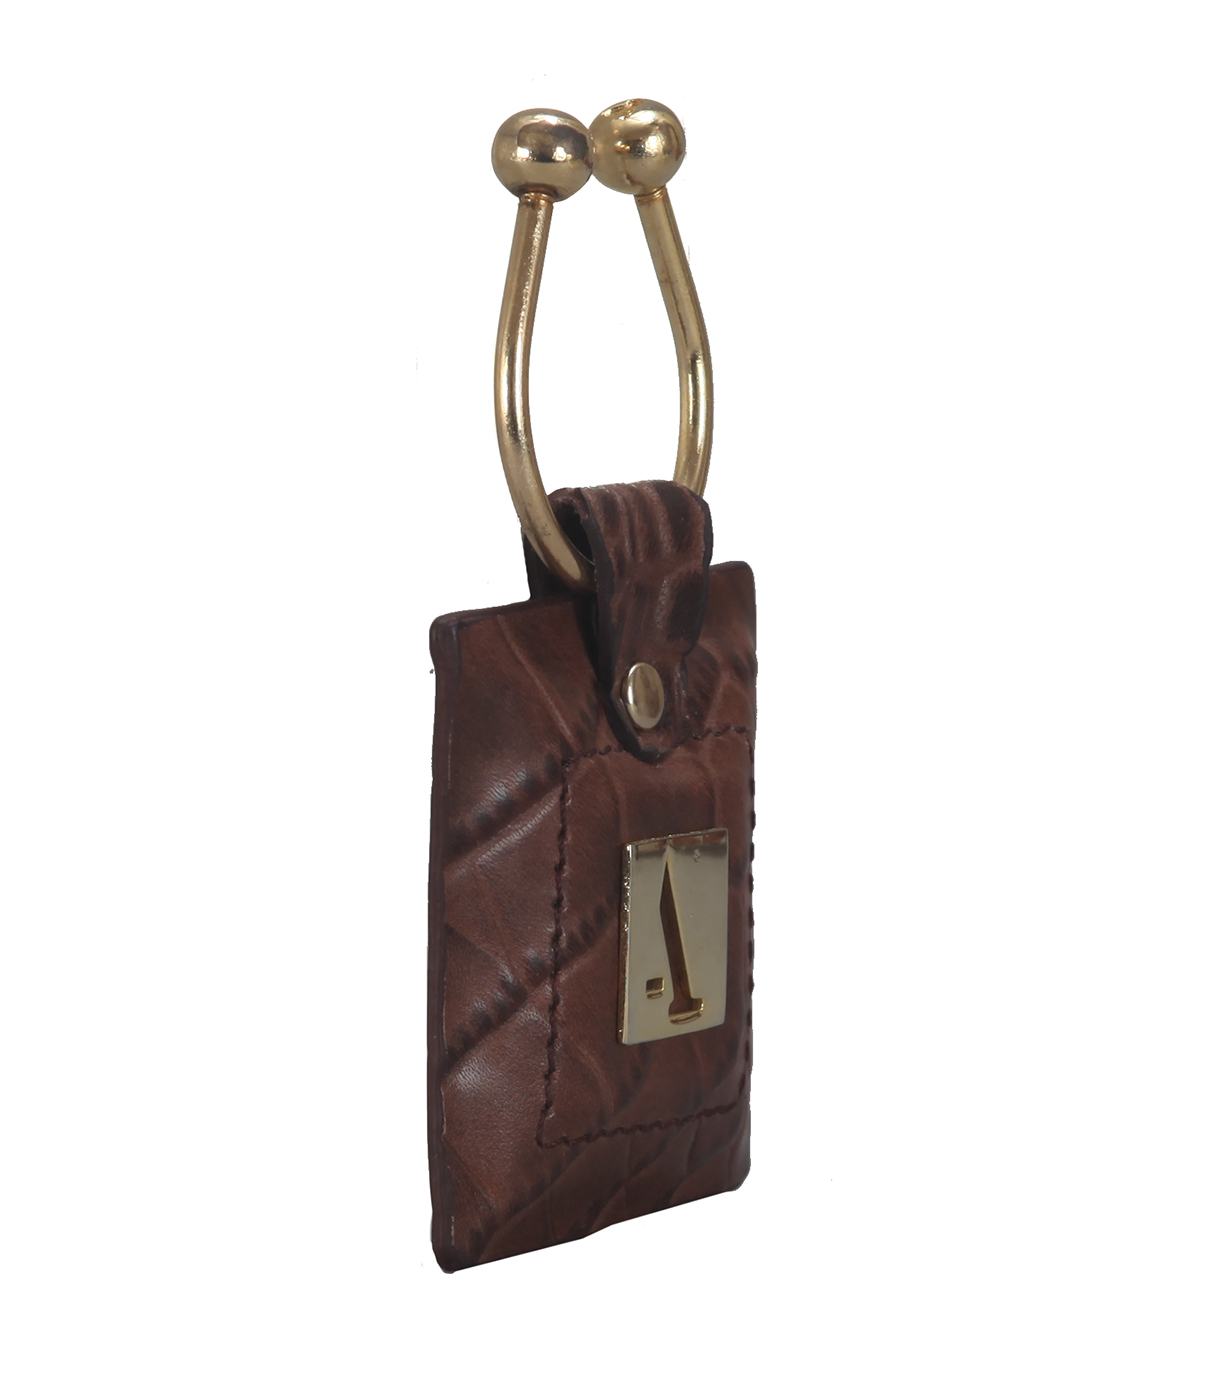 W269--Key holder with knob screw key fitting in Genuine Leather - Brown.